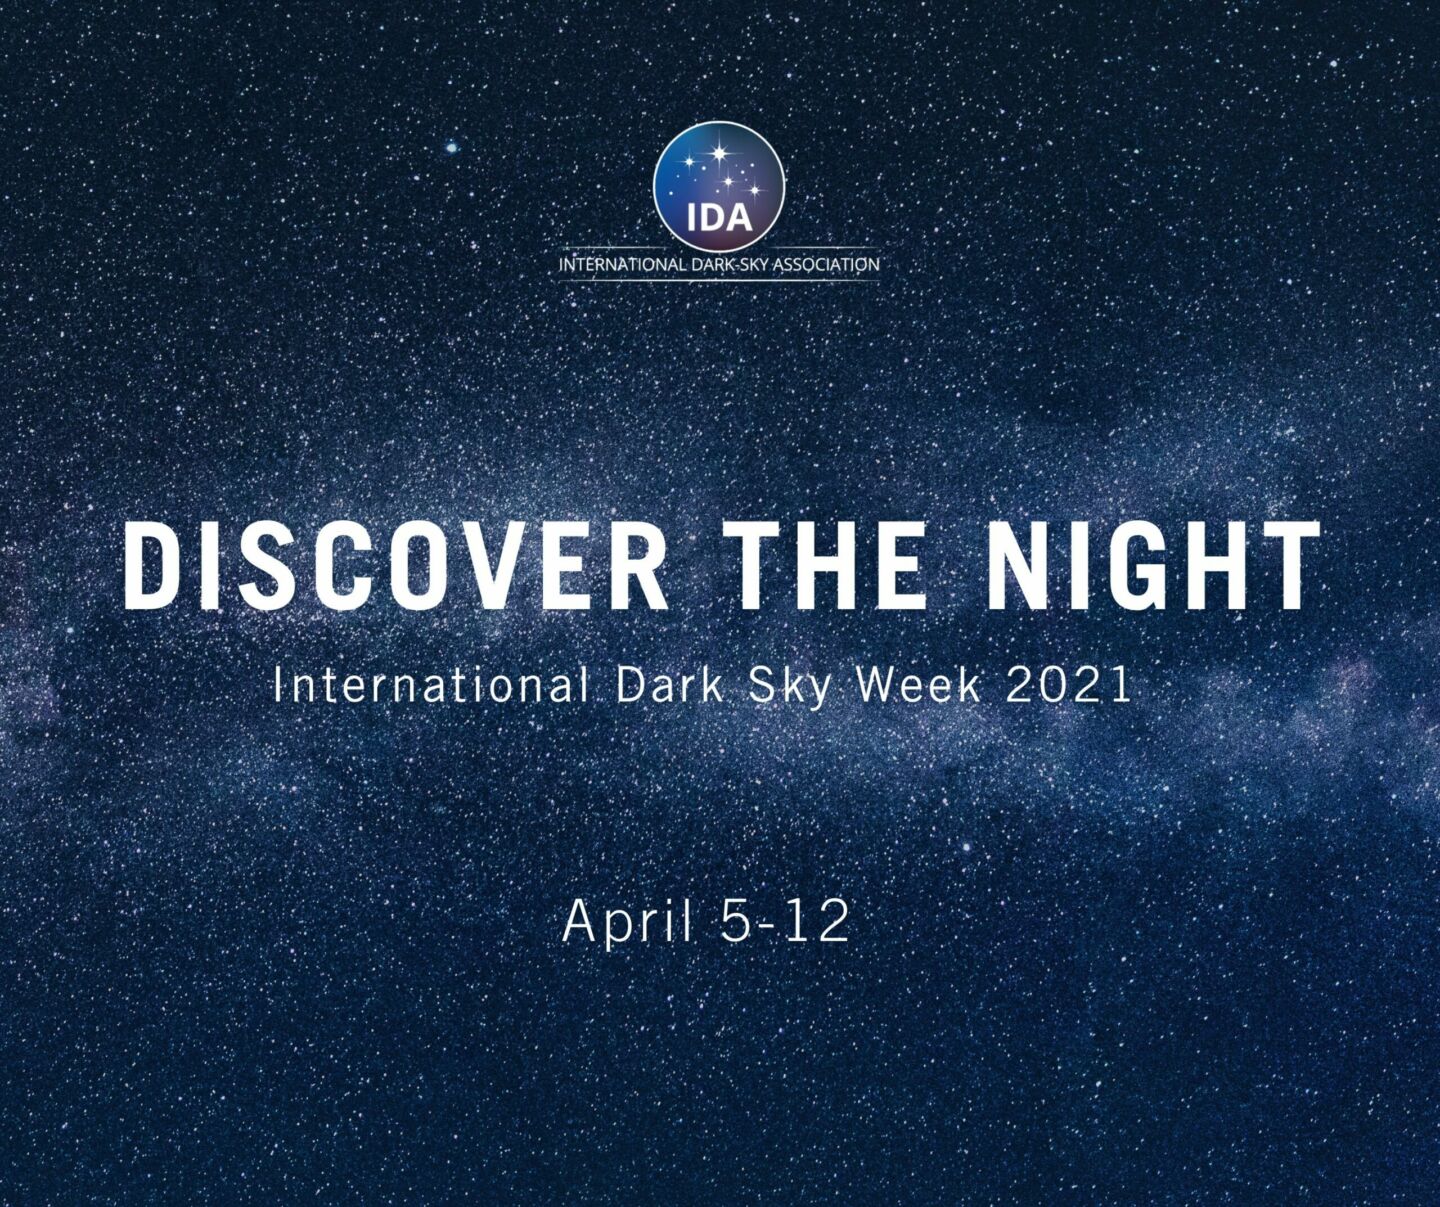 International Dark Sky Week 2021 Dates